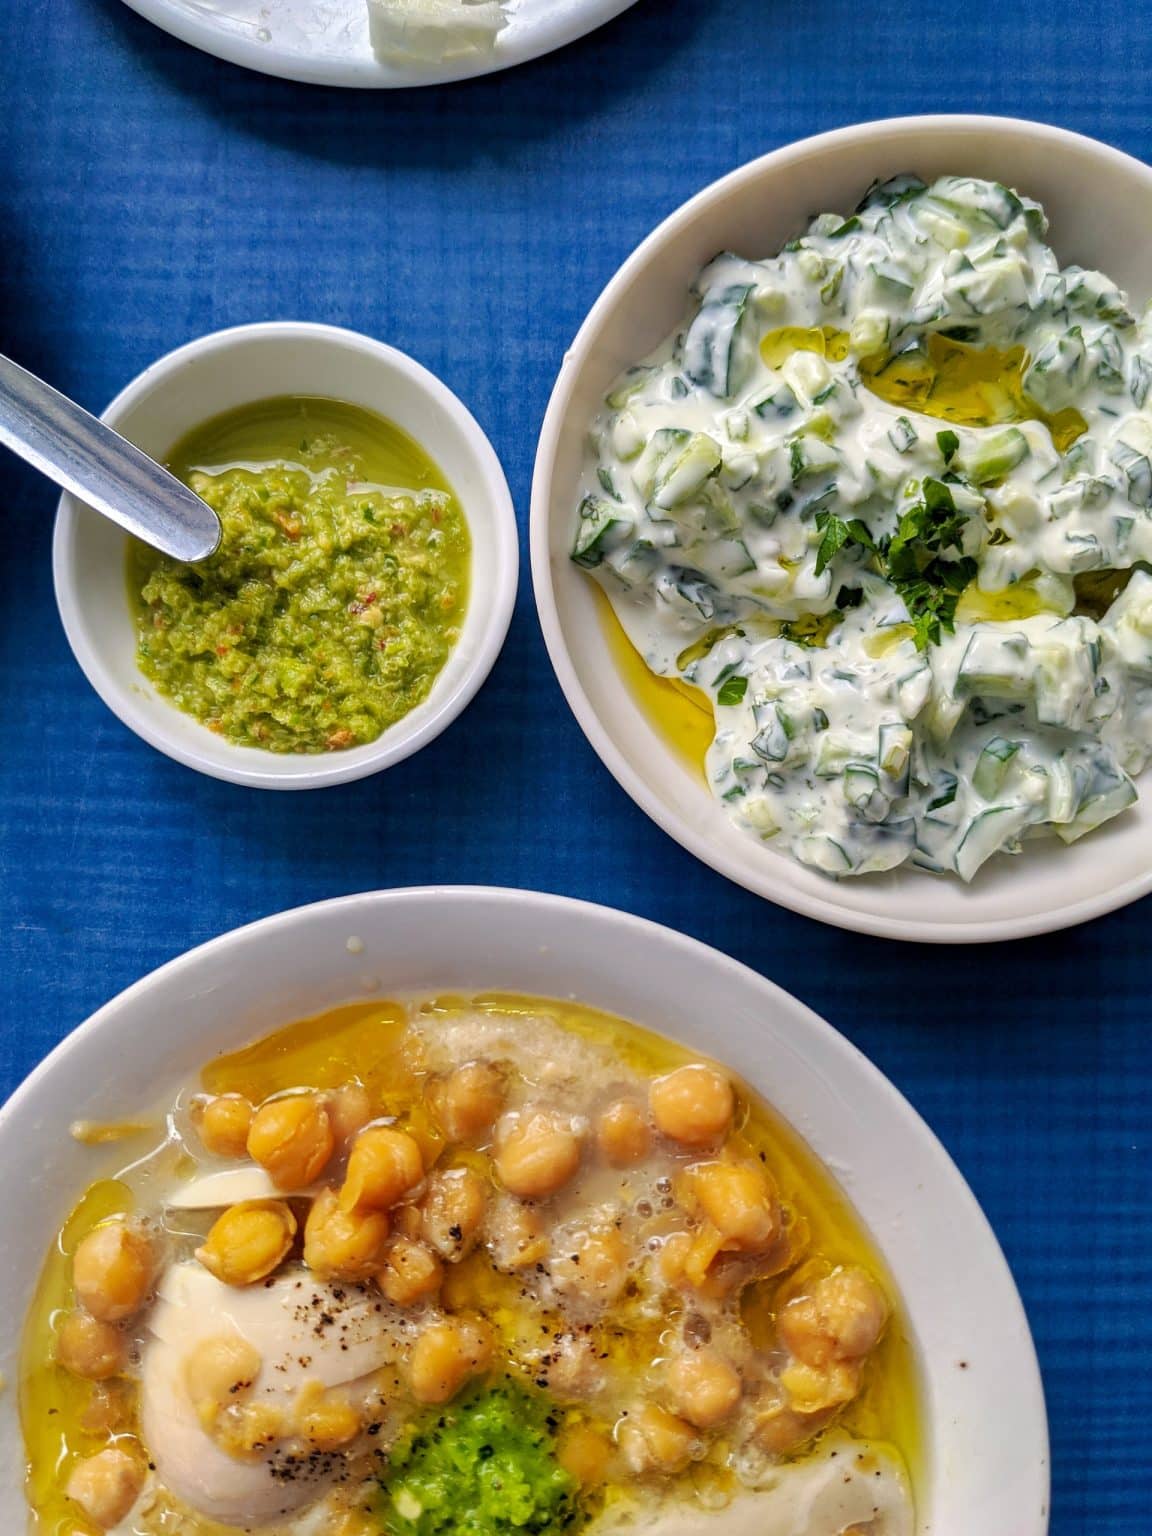 Israeli Hummus and salads